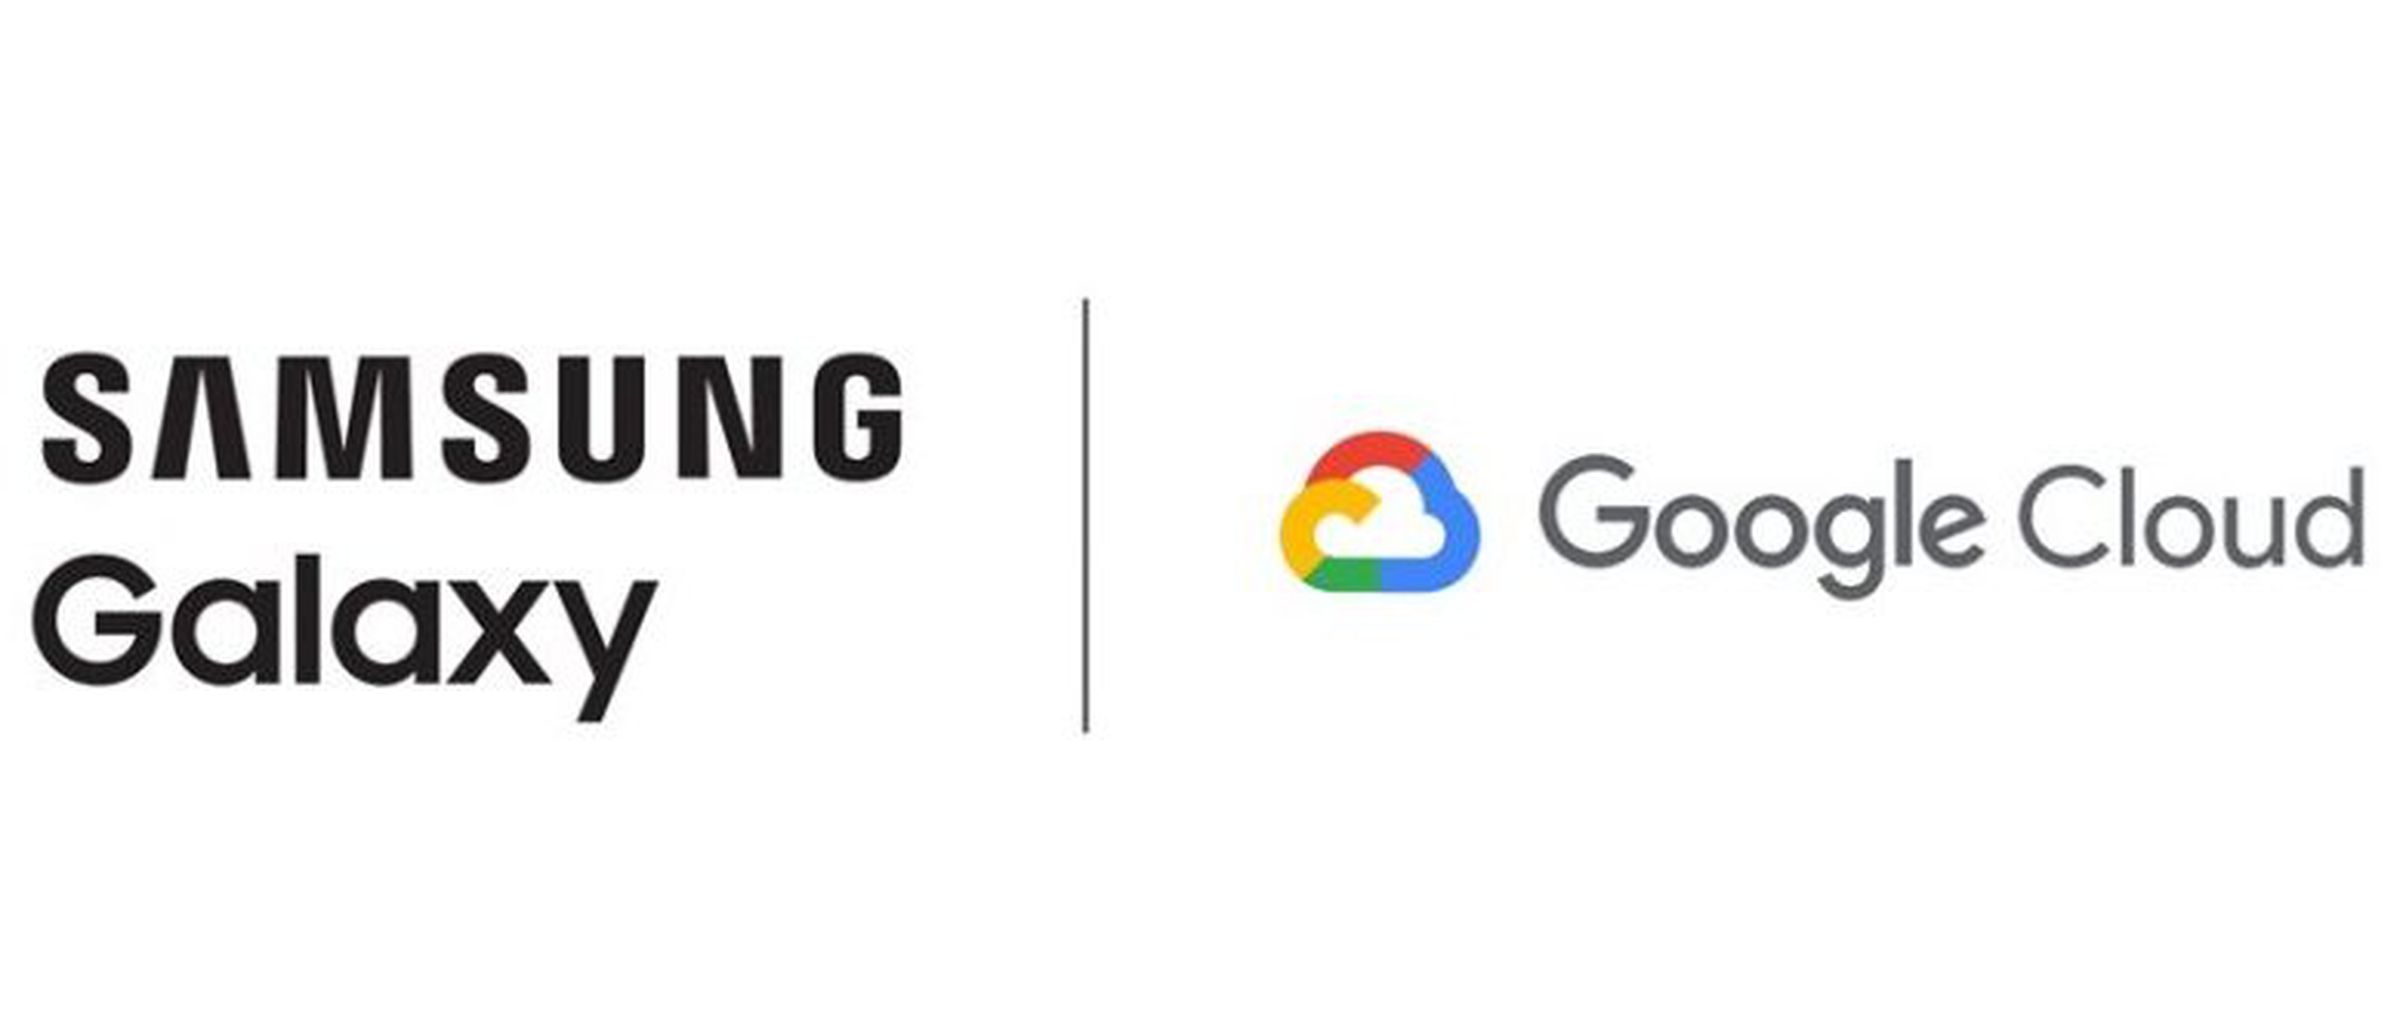 Samsung Galaxy and Google Cloud logos